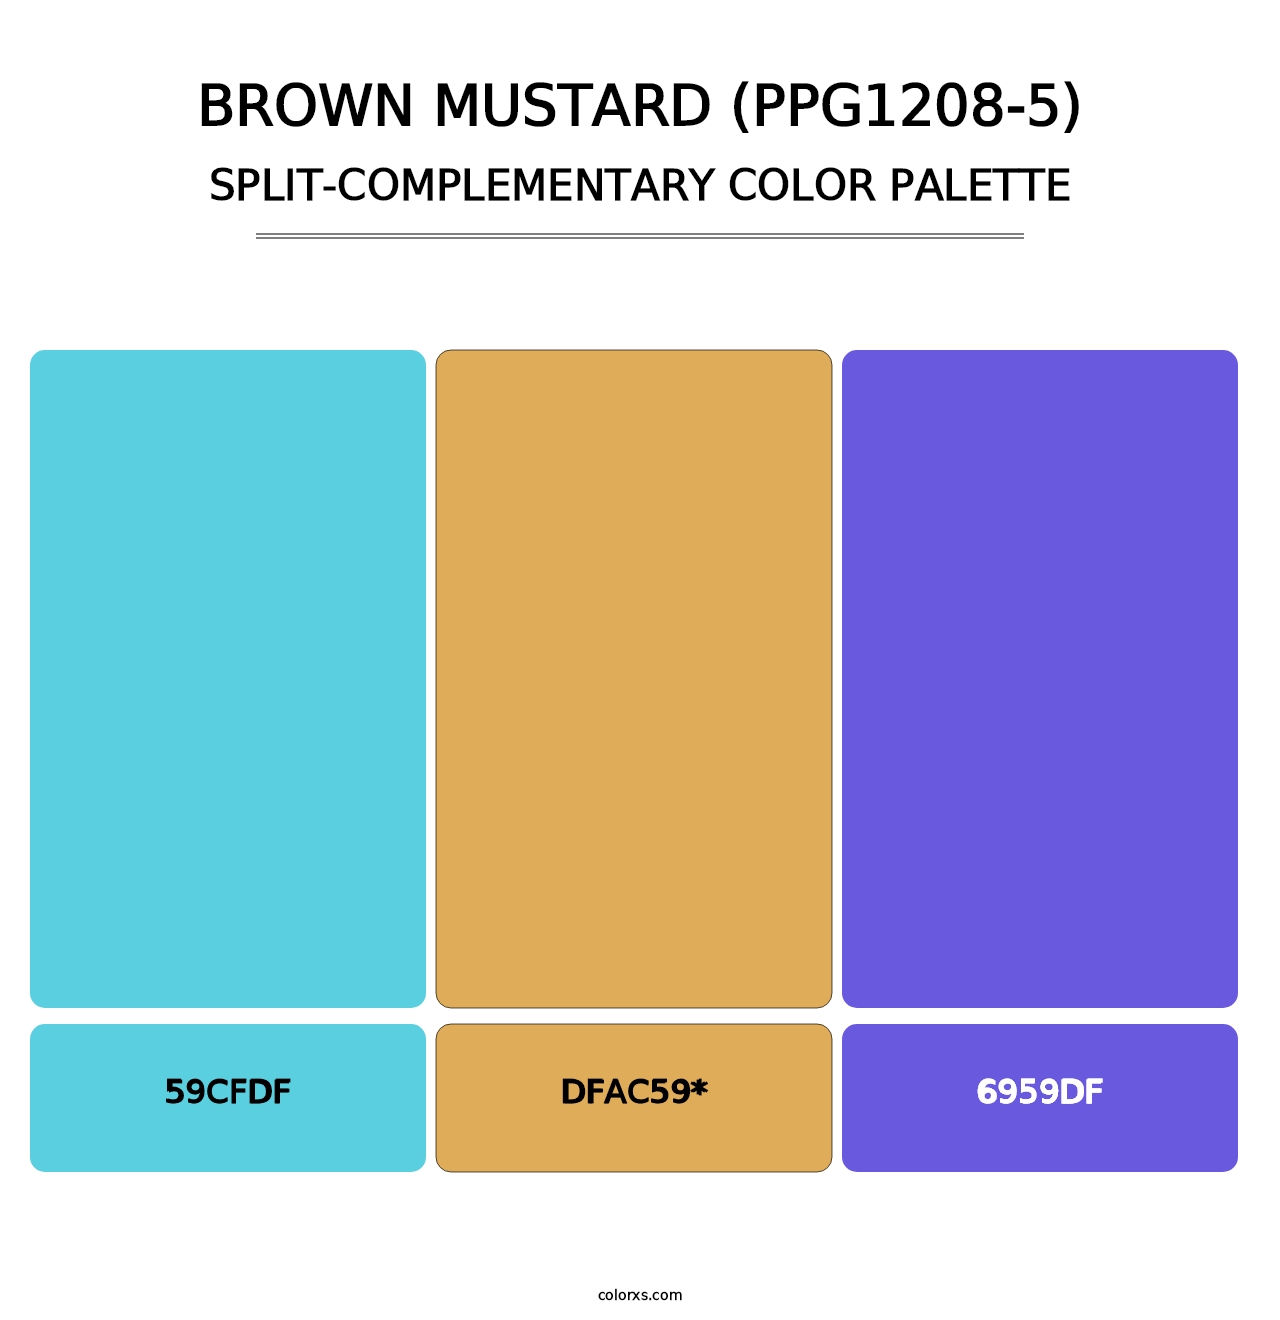 Brown Mustard (PPG1208-5) - Split-Complementary Color Palette